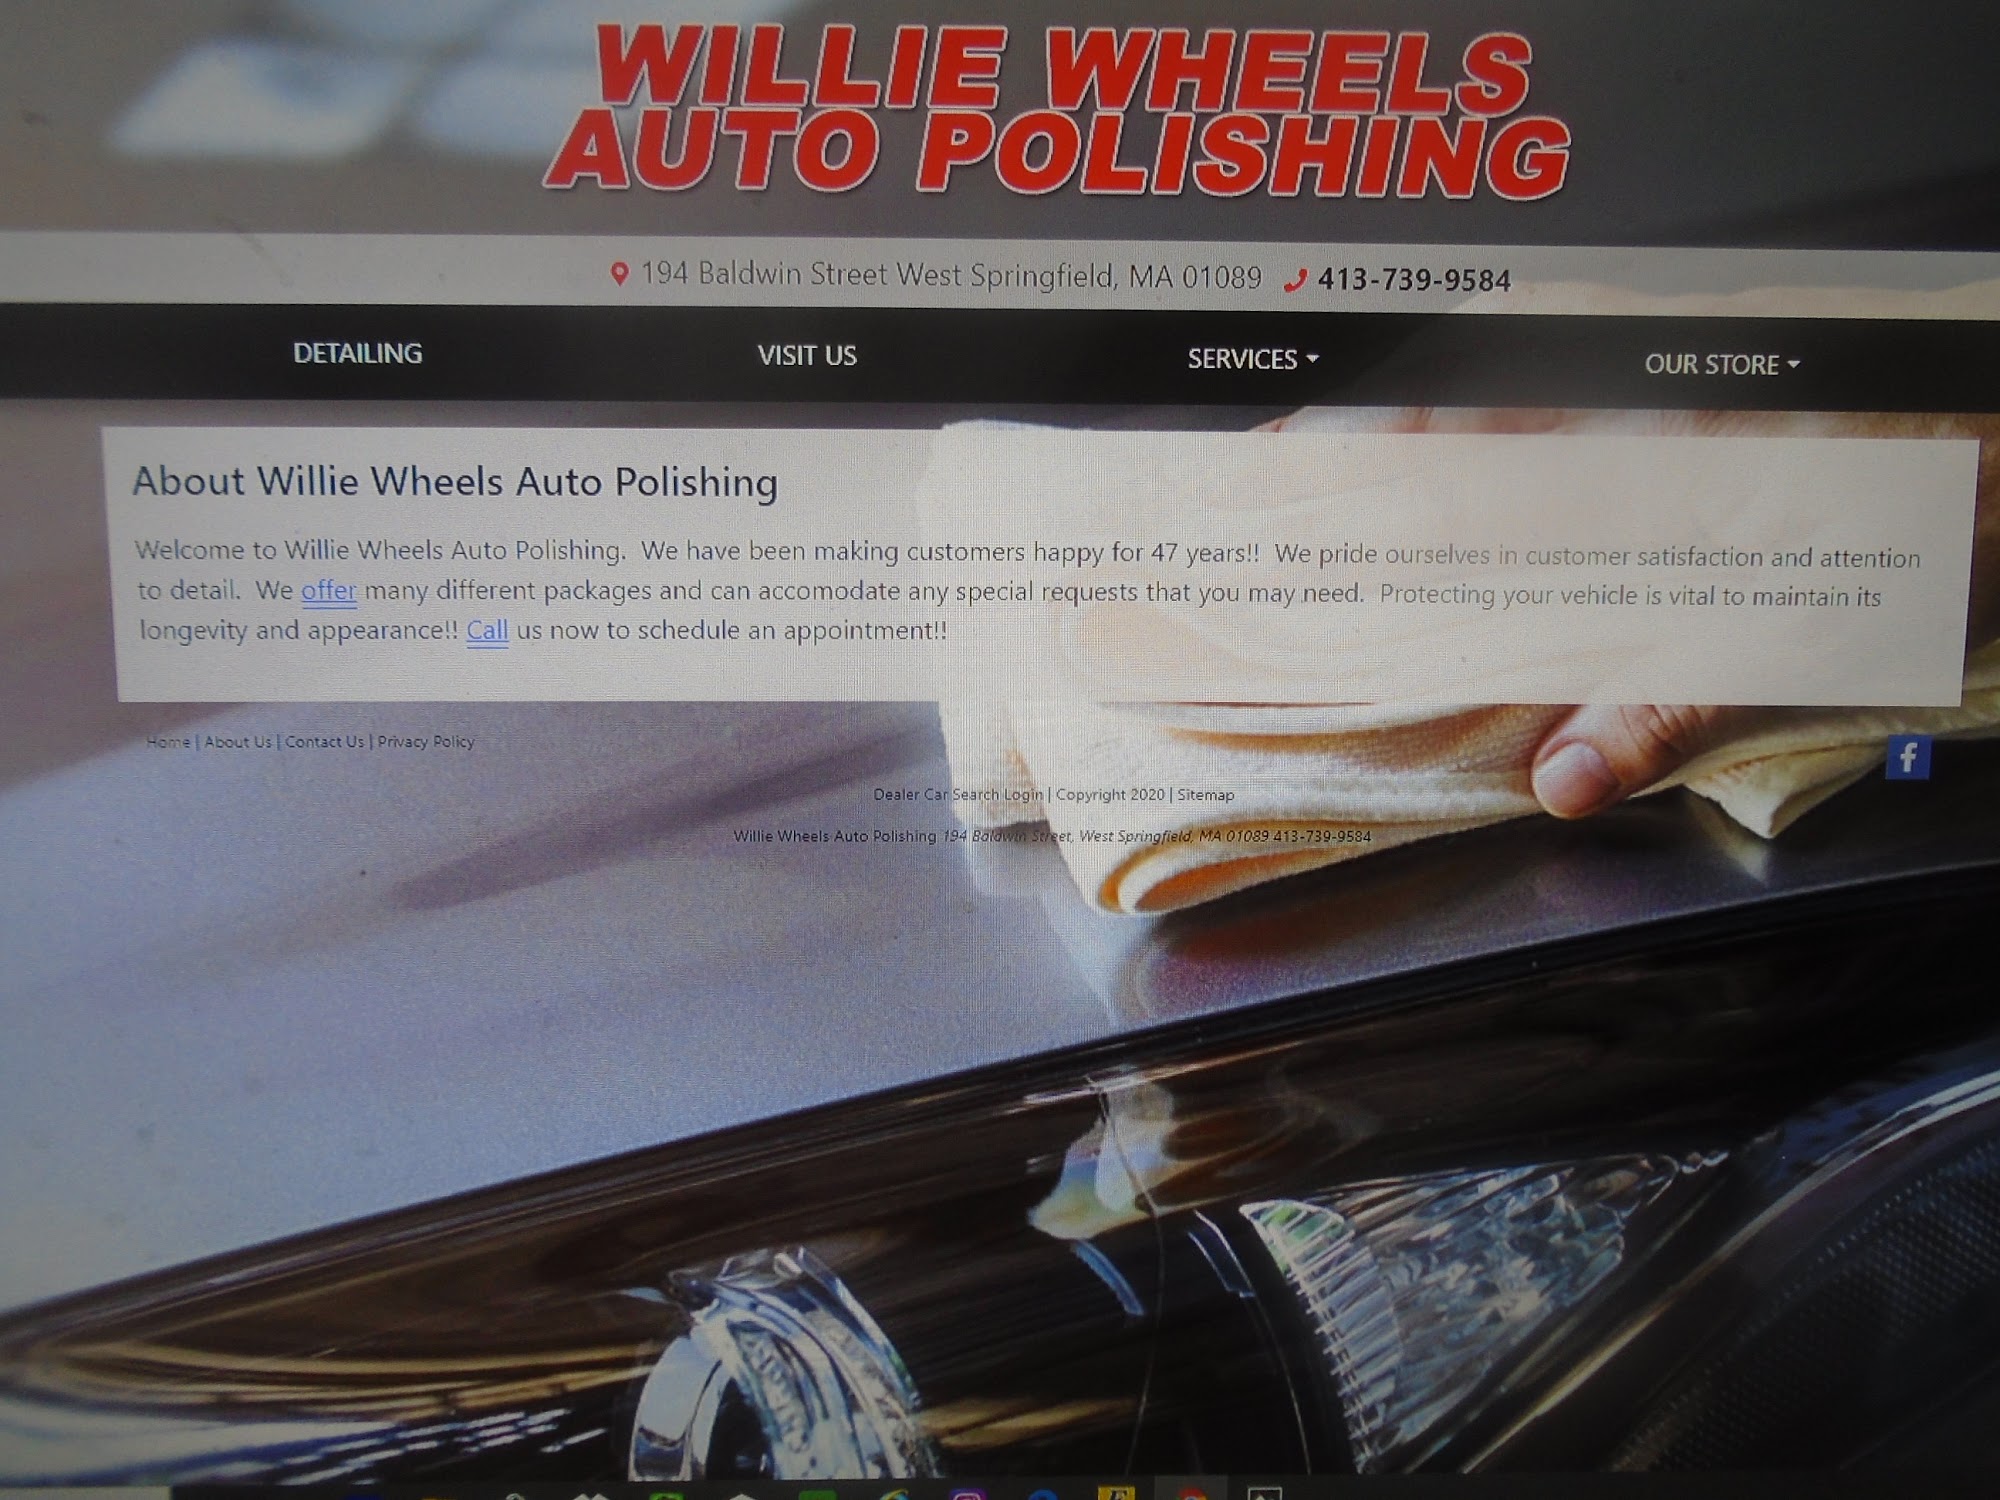 Willie Wheels Auto Polishing